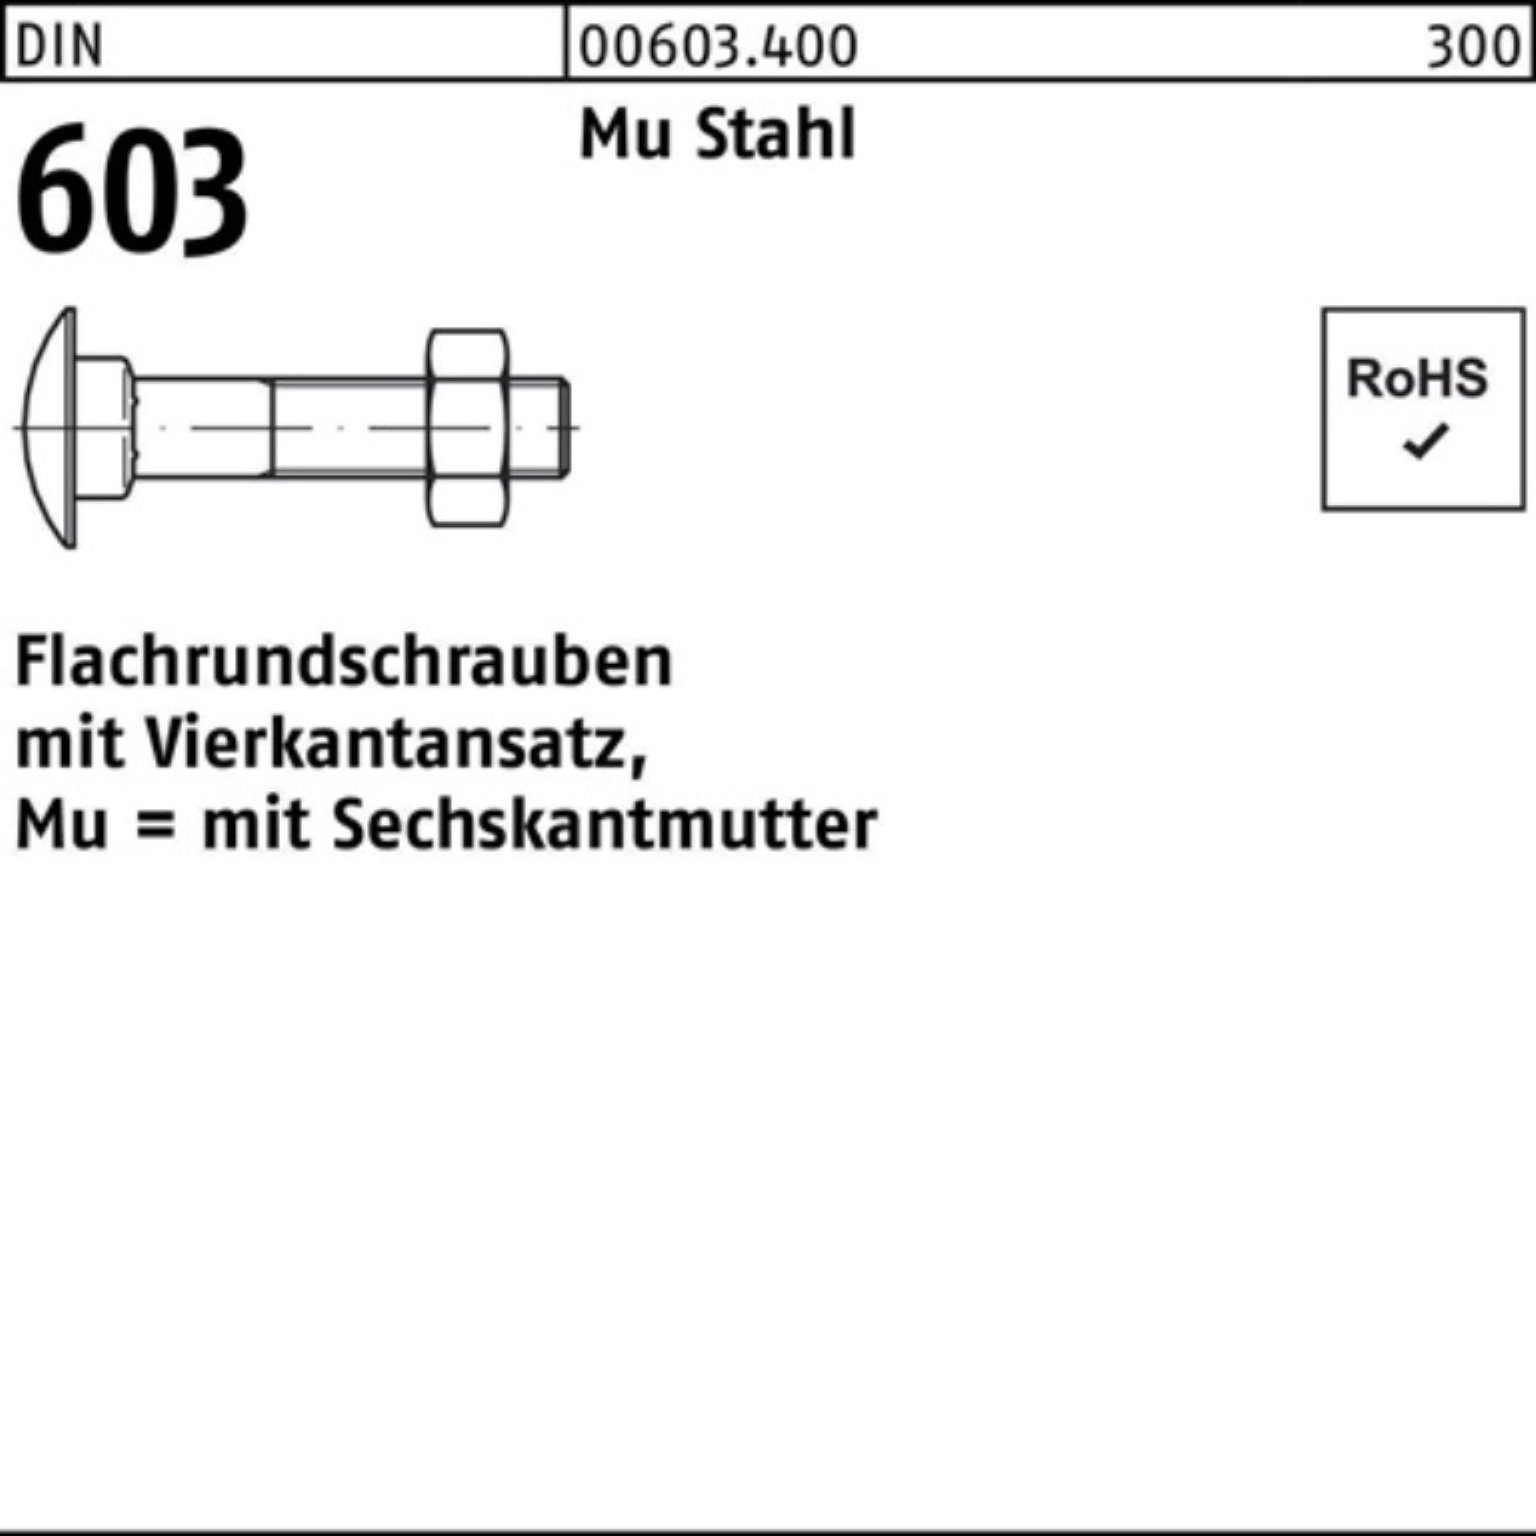 Flachrundschraube M8x160 Schraube 603 Reyher Vierkantansatz/6-ktmutter DIN Pack 100er